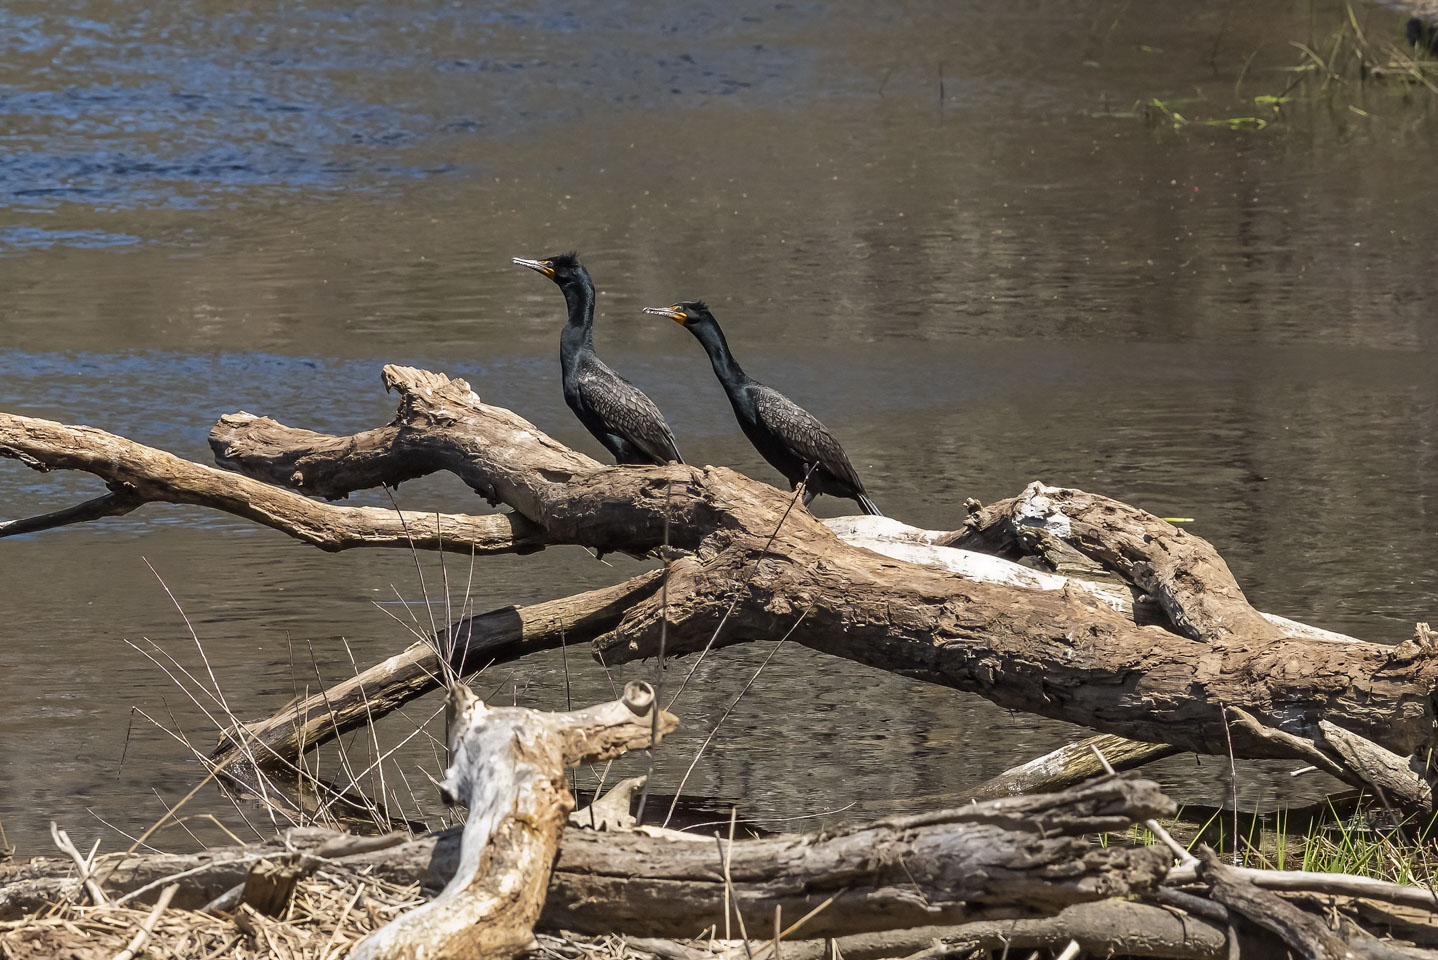 Two cormorants on a log